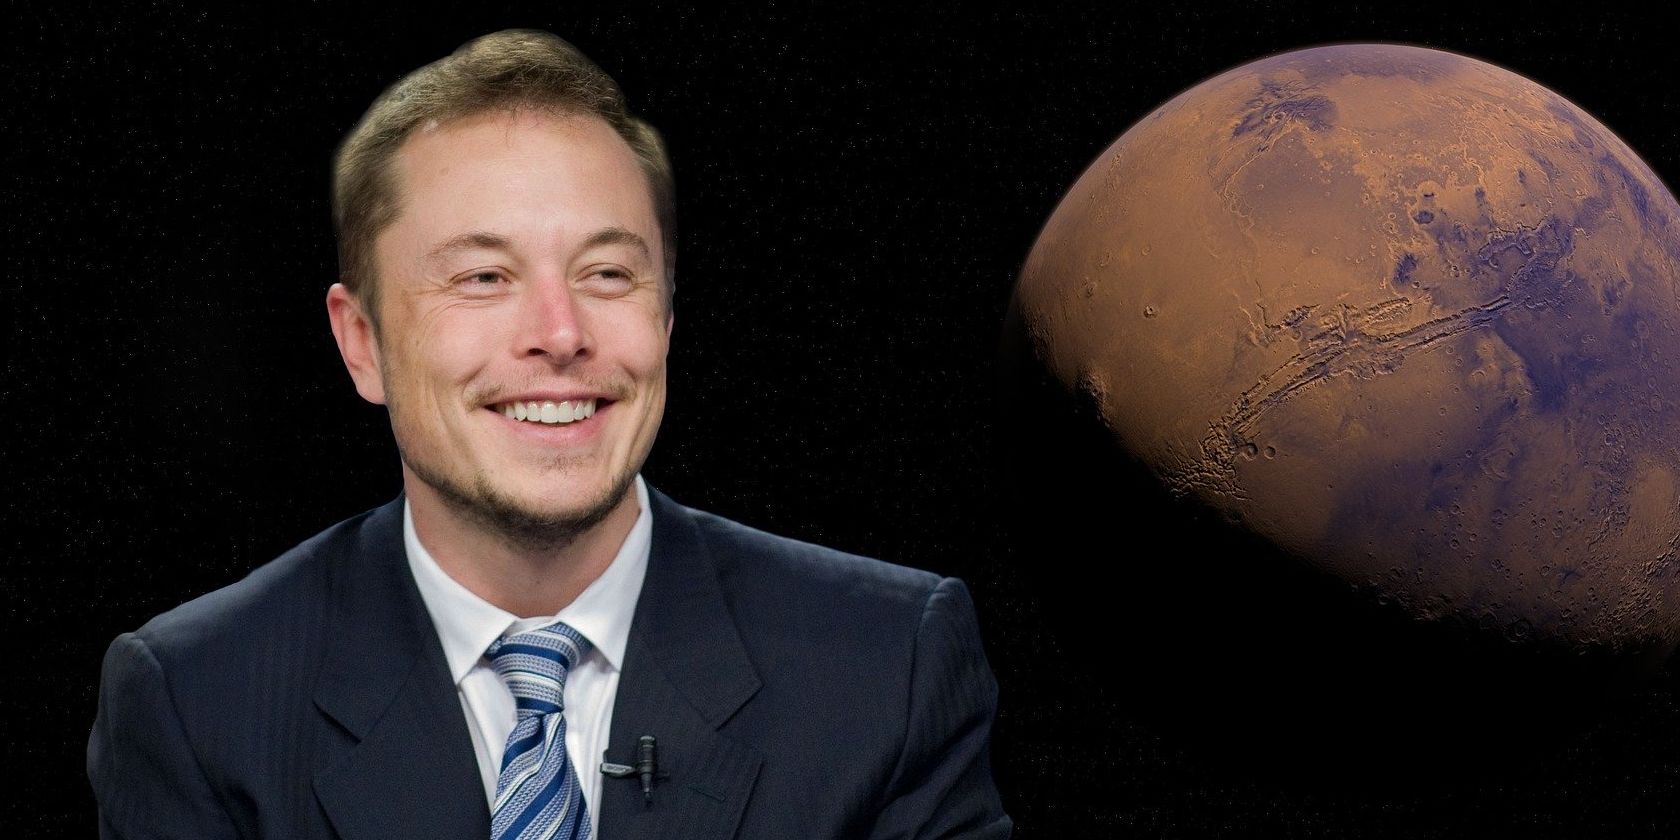 Photo of Elon Musk next to Mars